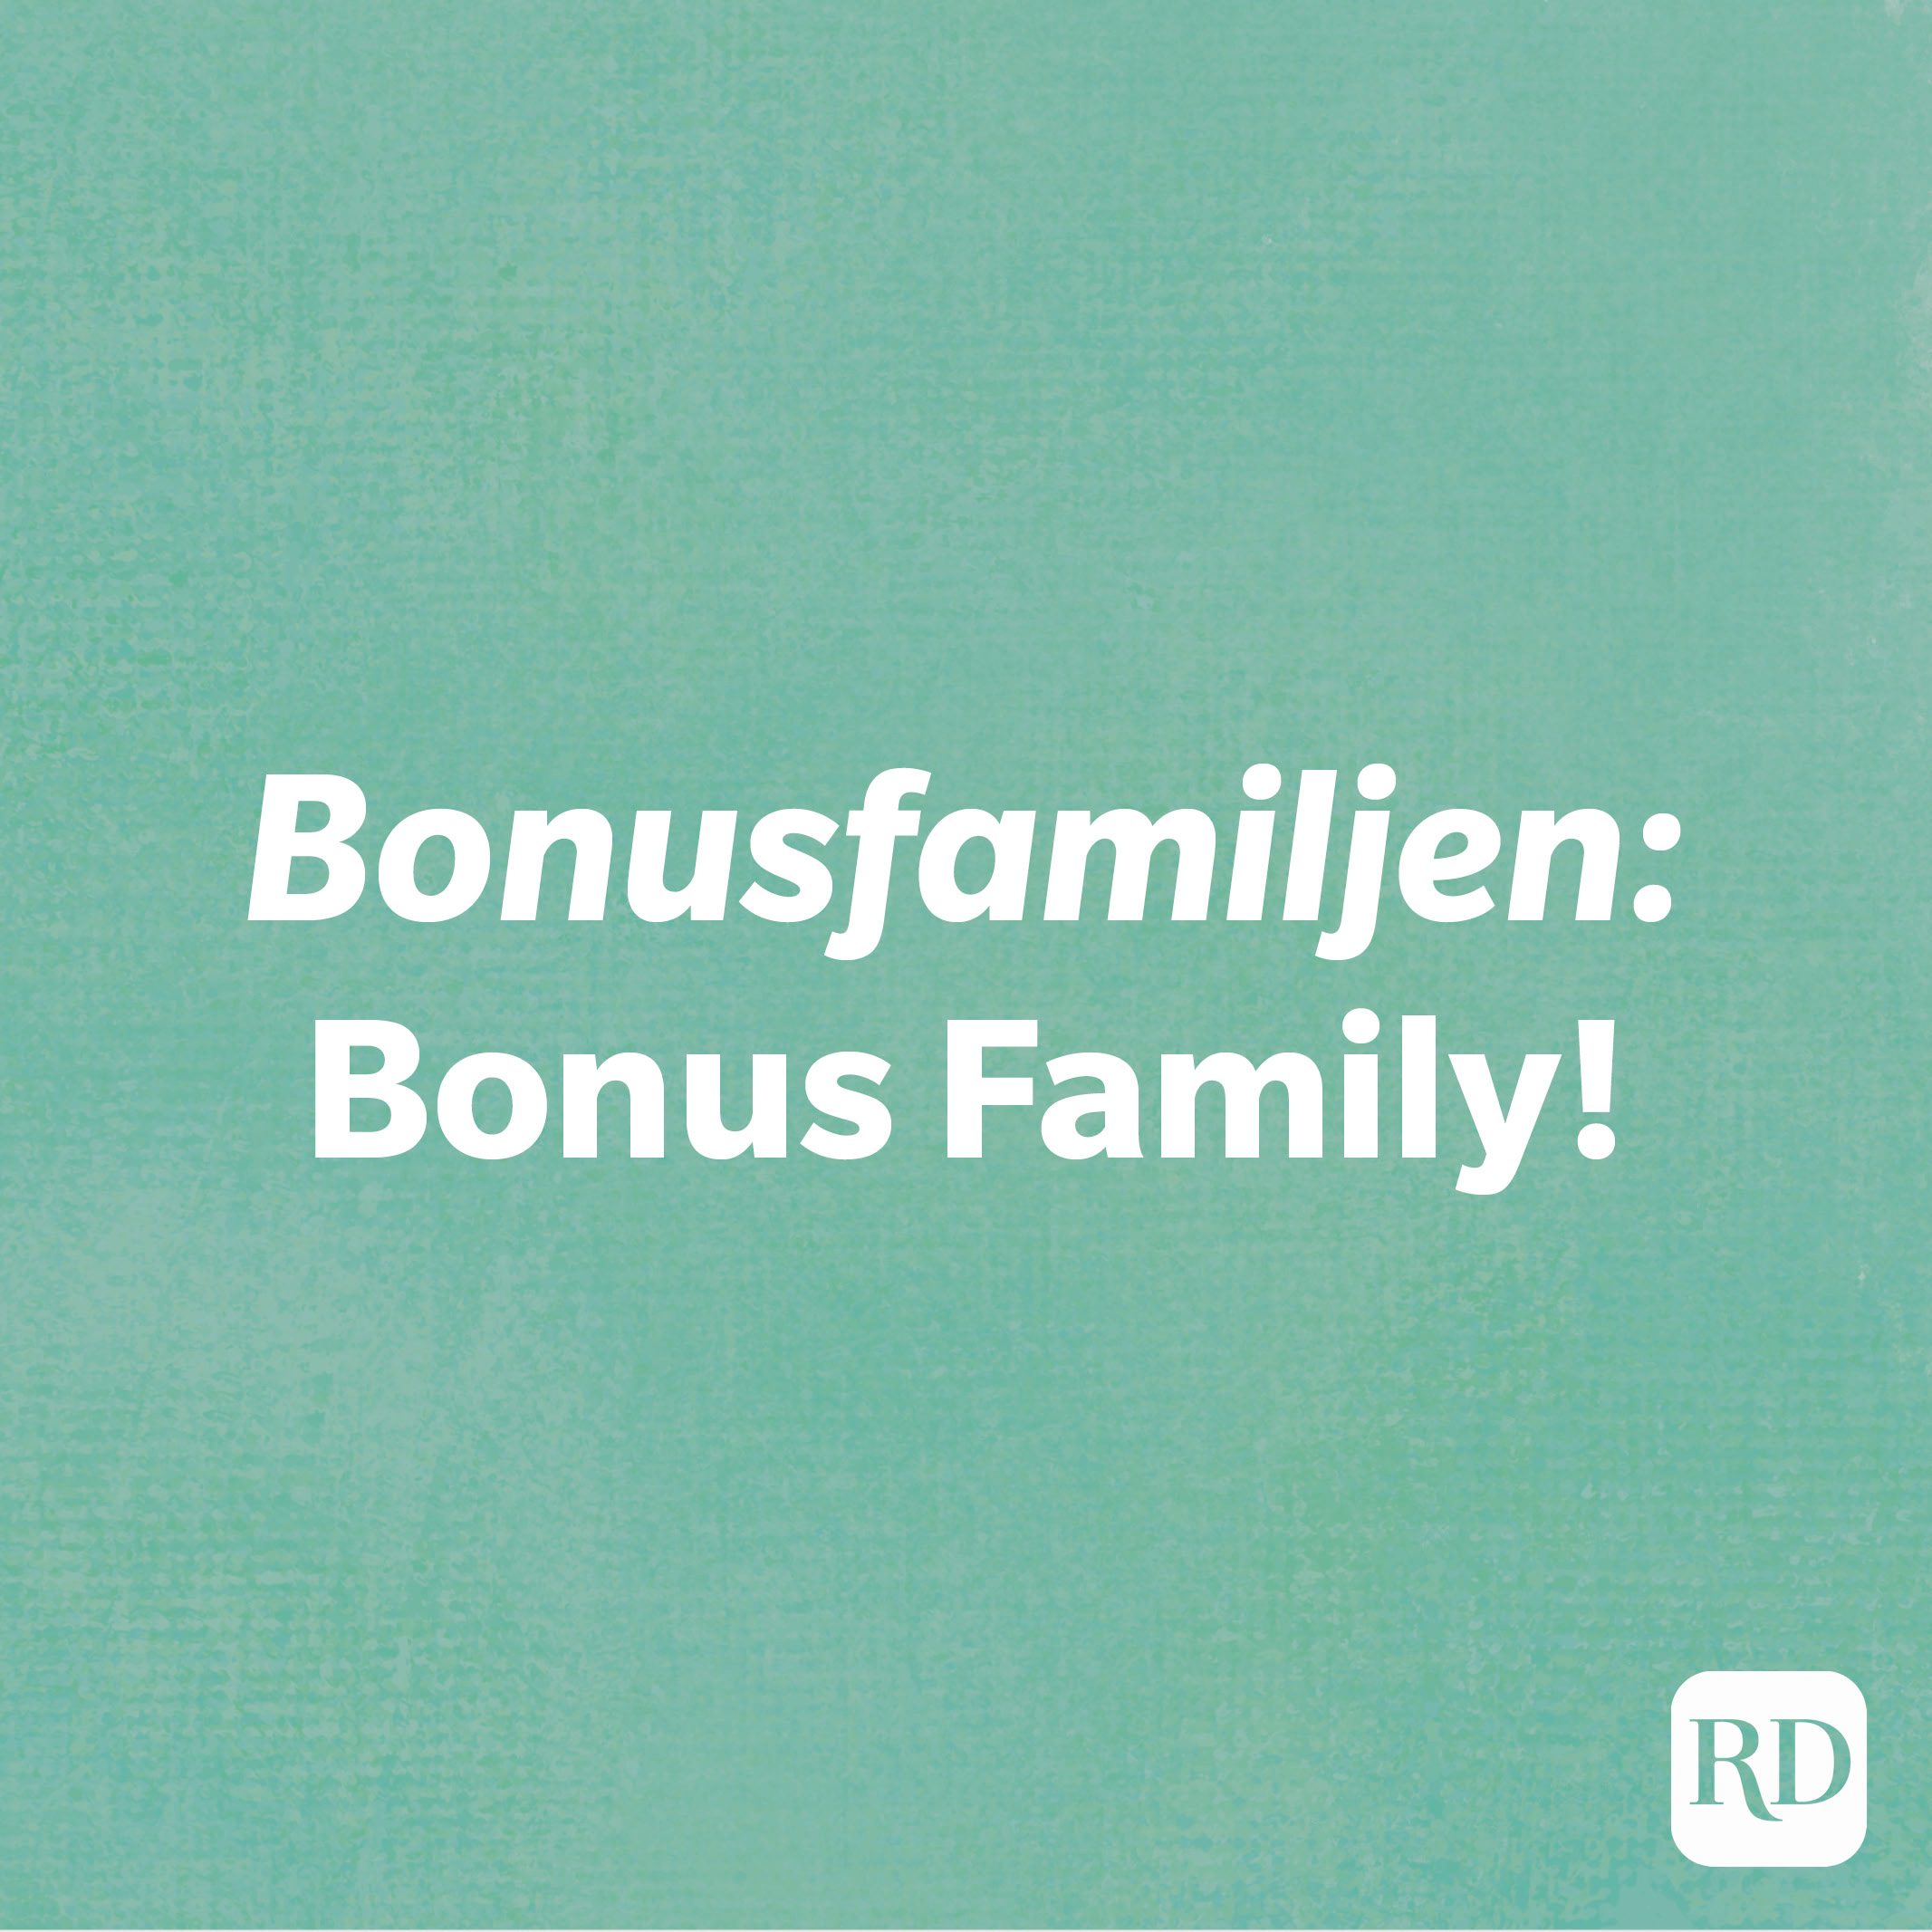 bonusfamiljen: Bonus Family!